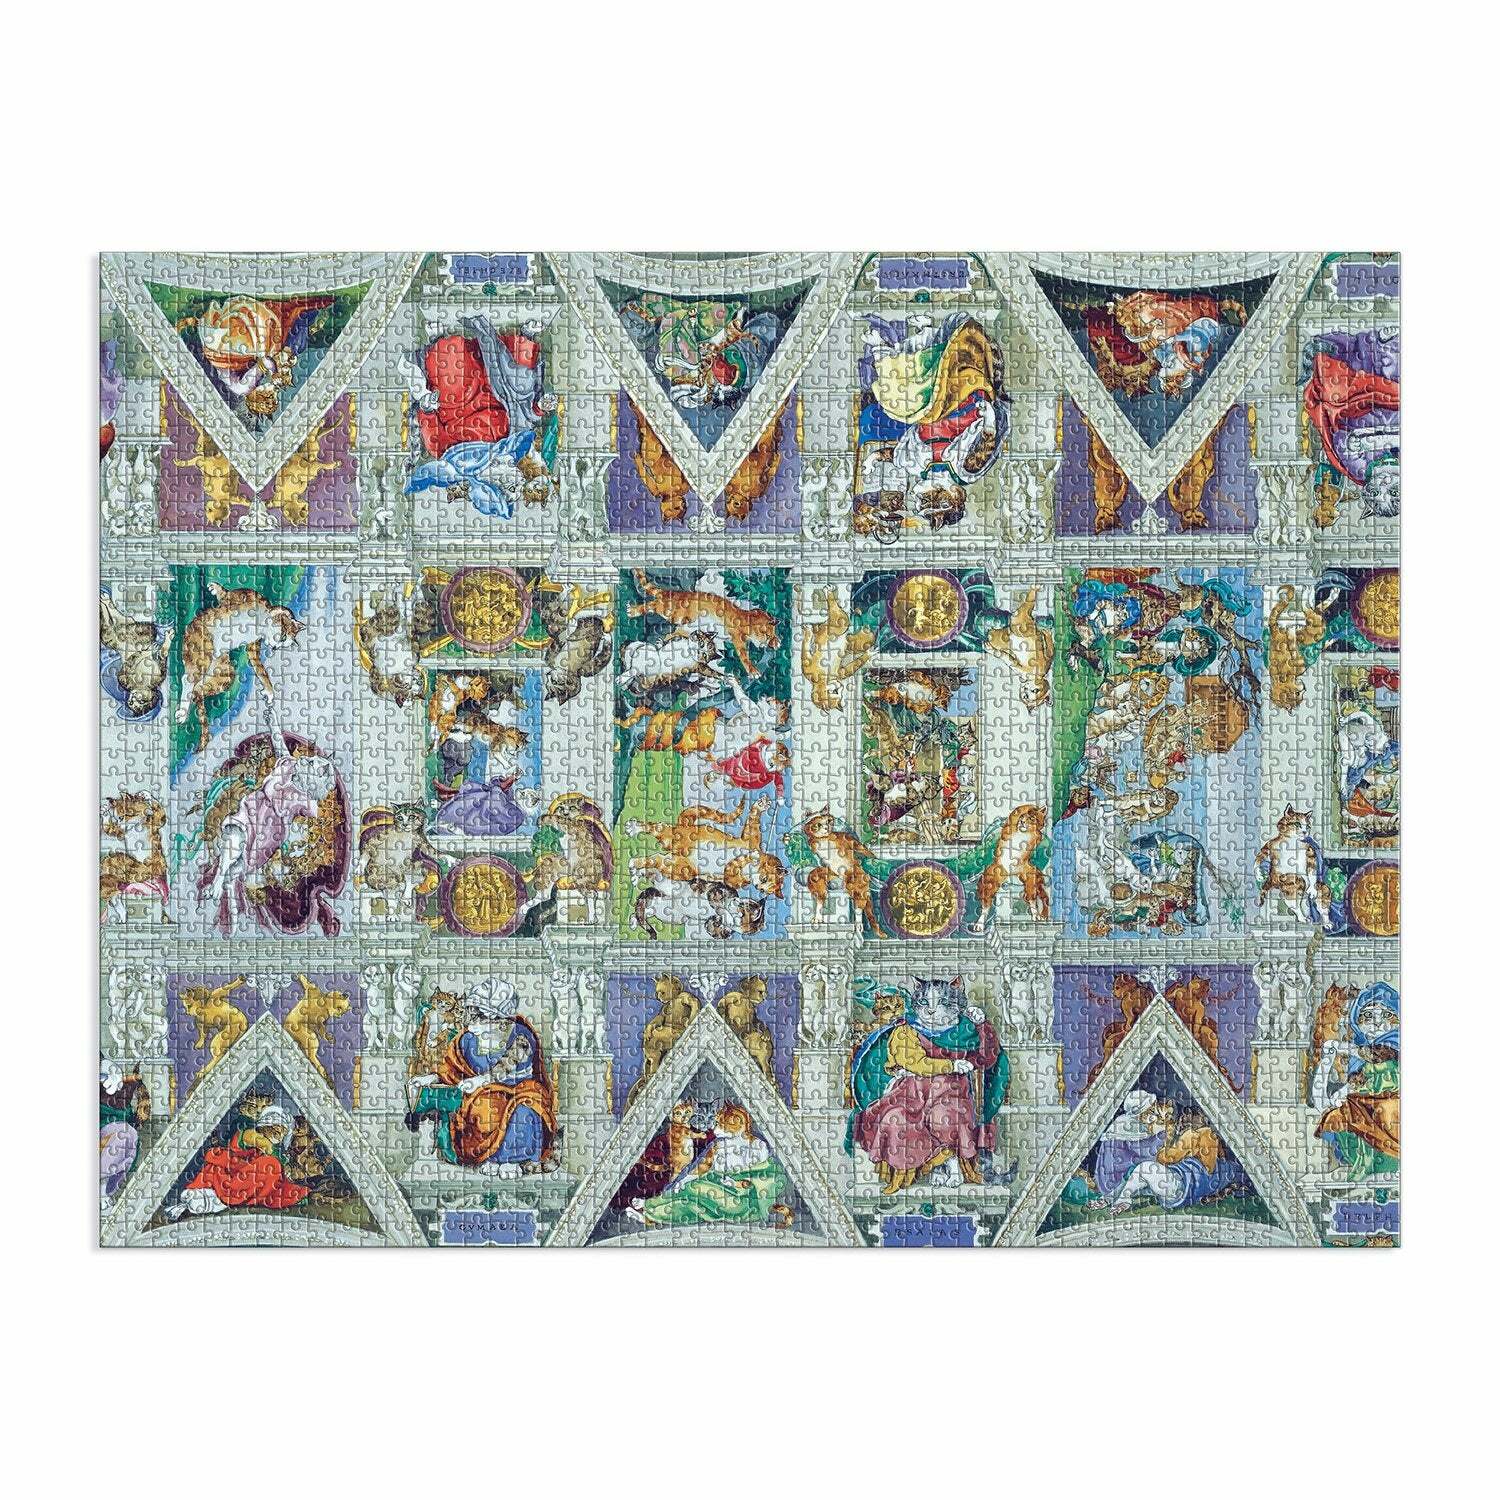 sistine-chapel-ceiling-meowsterpiece-of-western-art-2000-piece-jigsaw-puzzle-2000-piece-puzzles-susan-herbert-149679_2400x